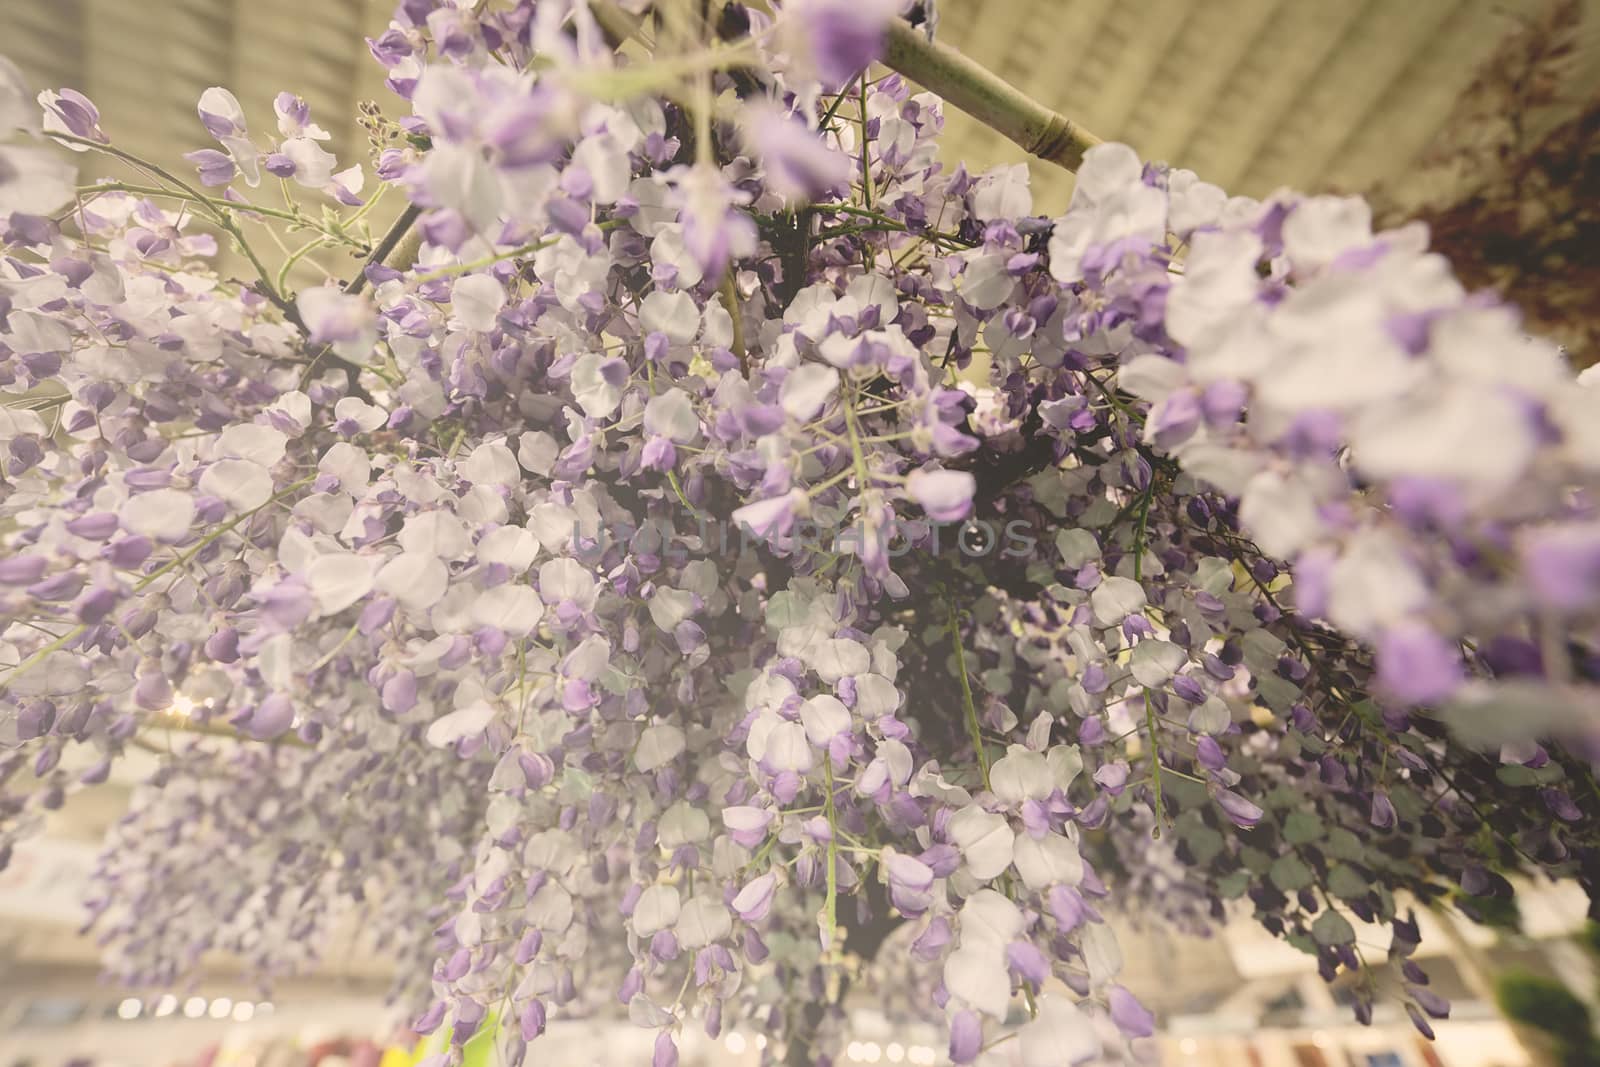 white and purple flowers by vladimirnenezic